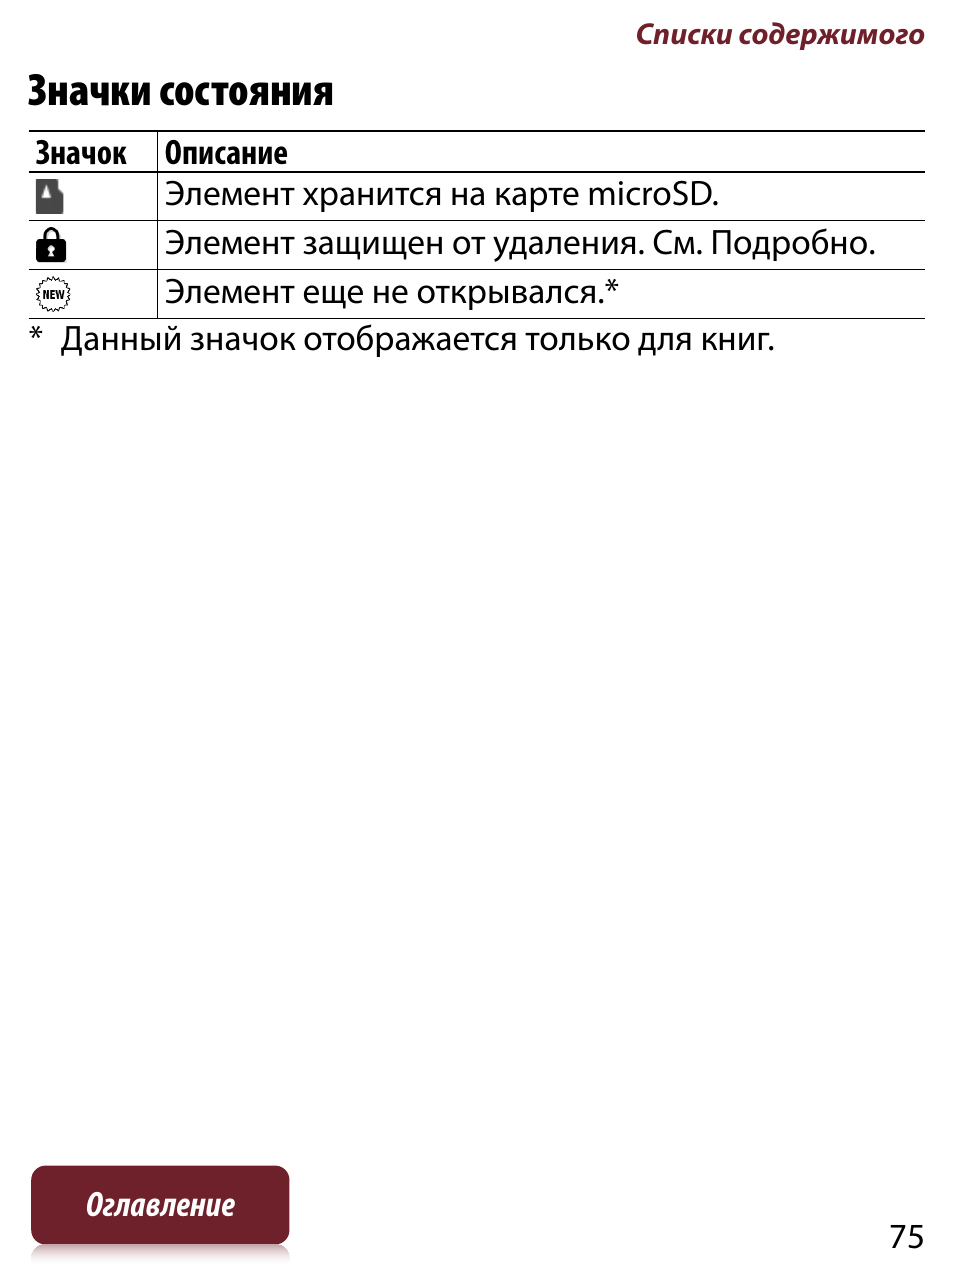 Значки состояния | Инструкция по эксплуатации Sony PRS-T1 | Страница 75 / 267